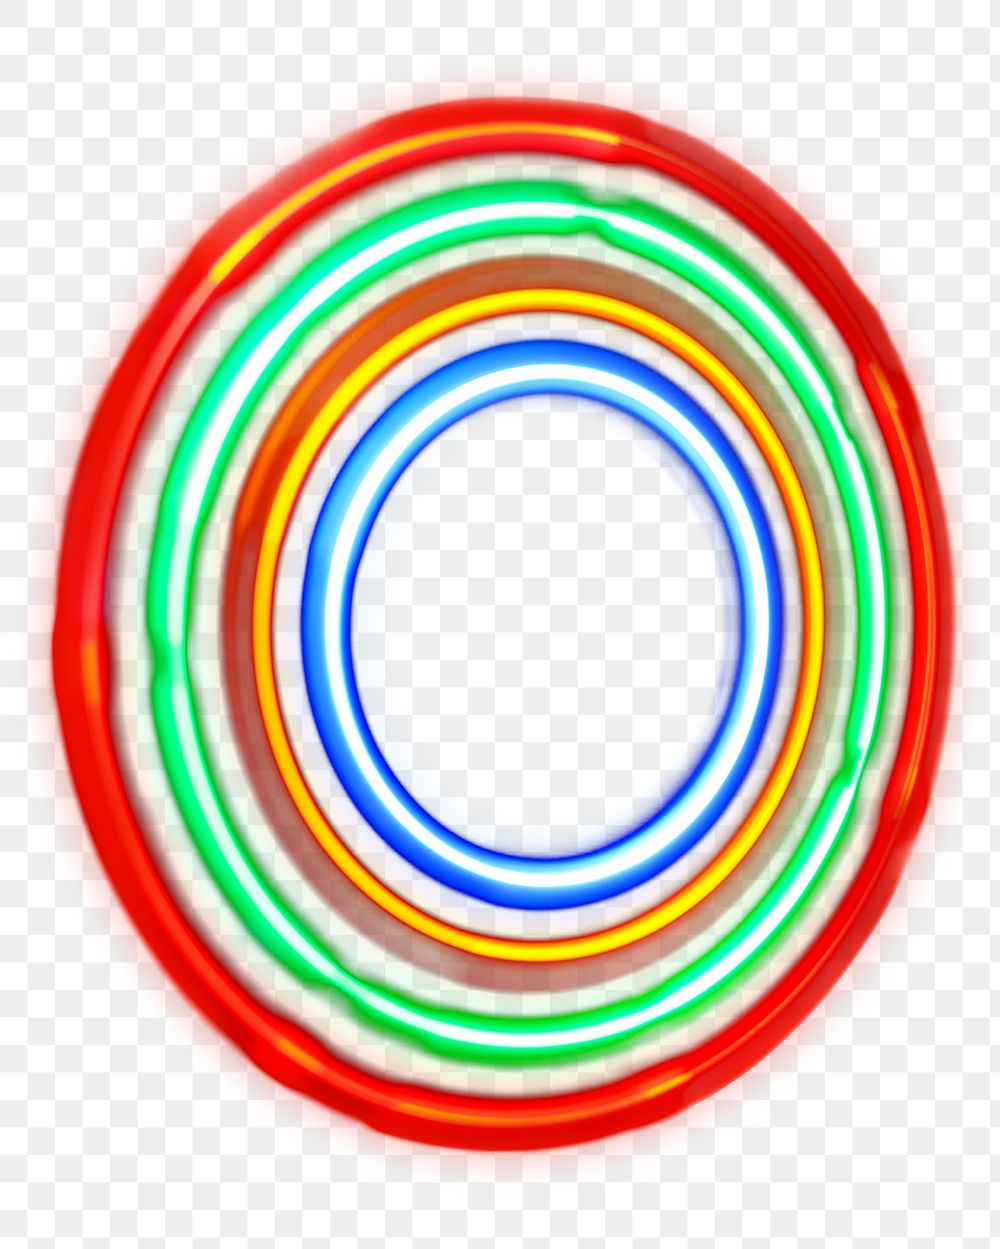 Light circles png sticker, transparent background